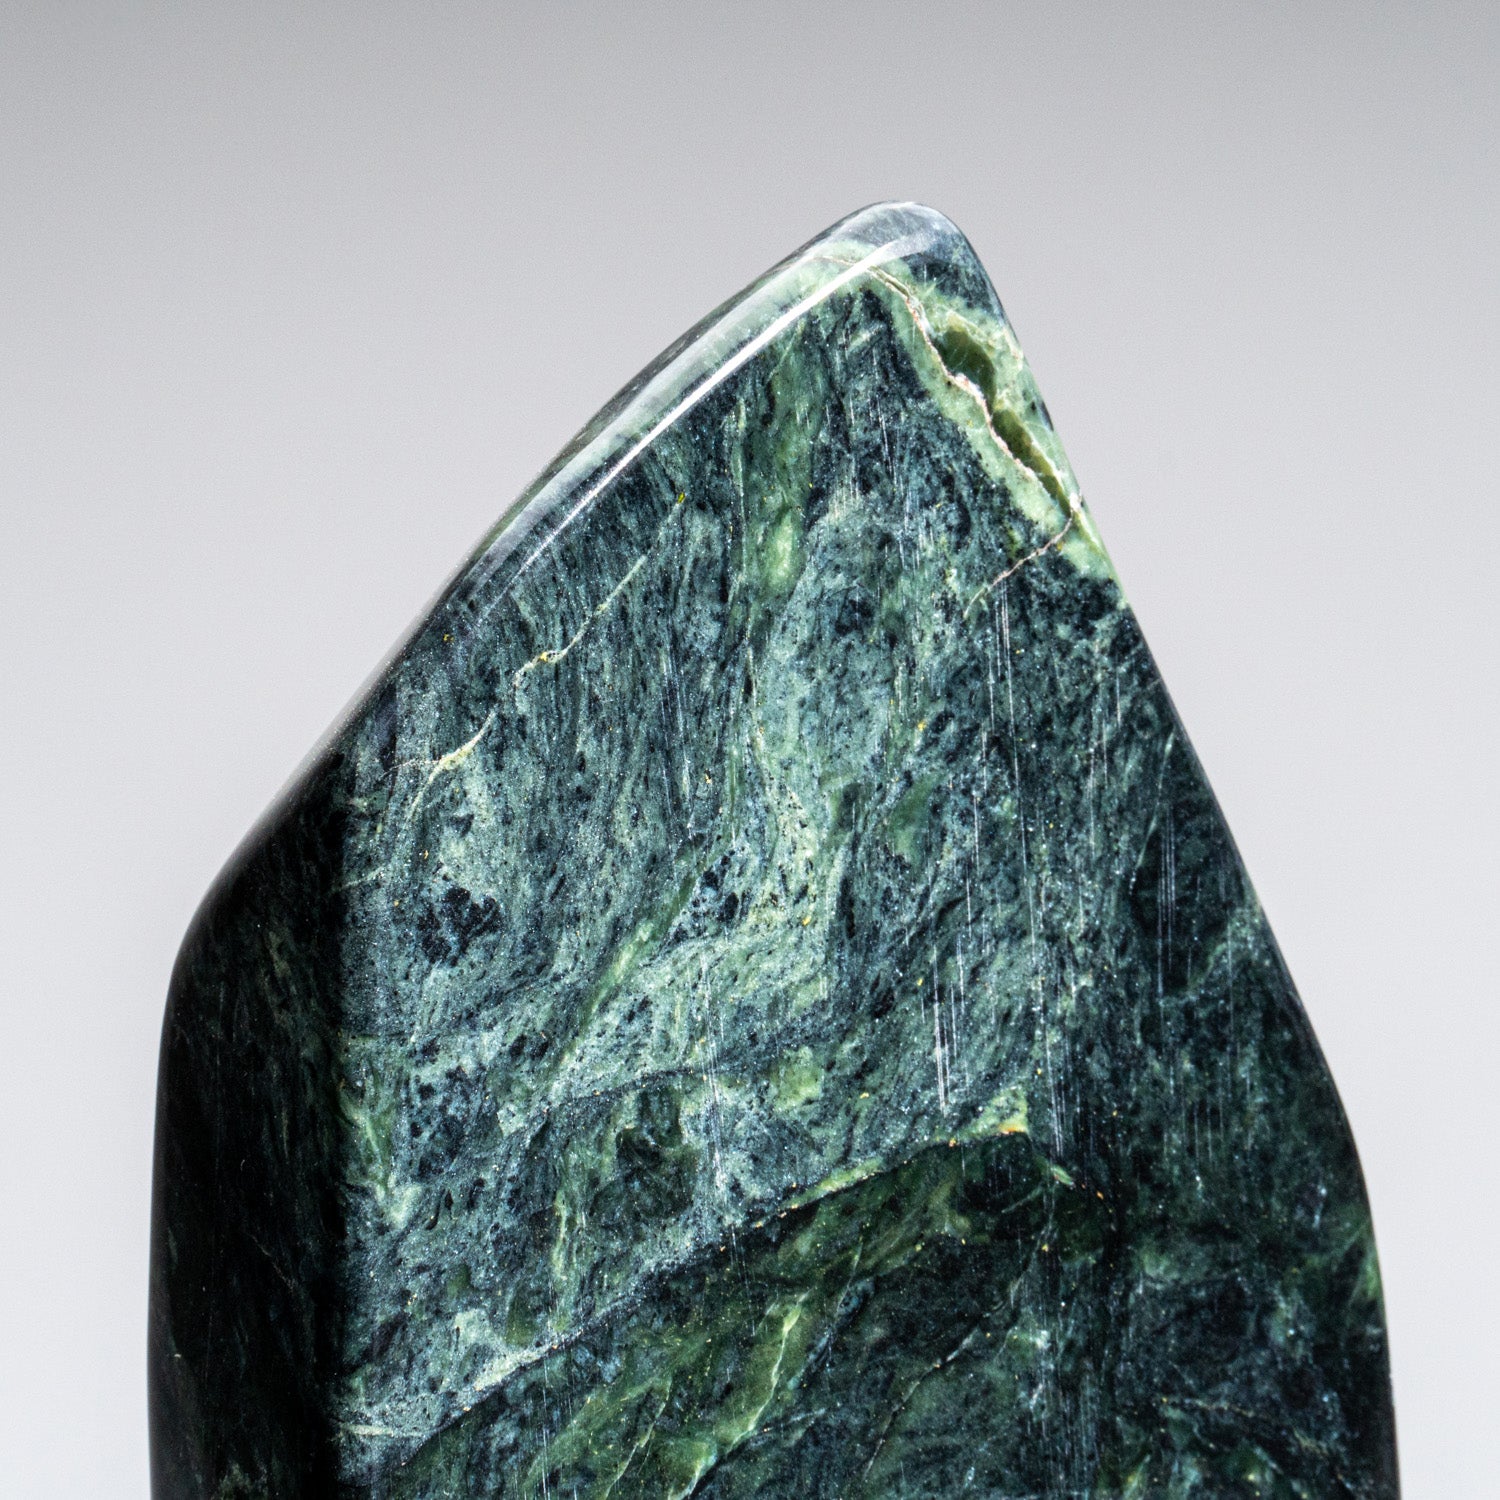 Polished Nephrite Jade Freeform from Pakistan (3.3 lbs)